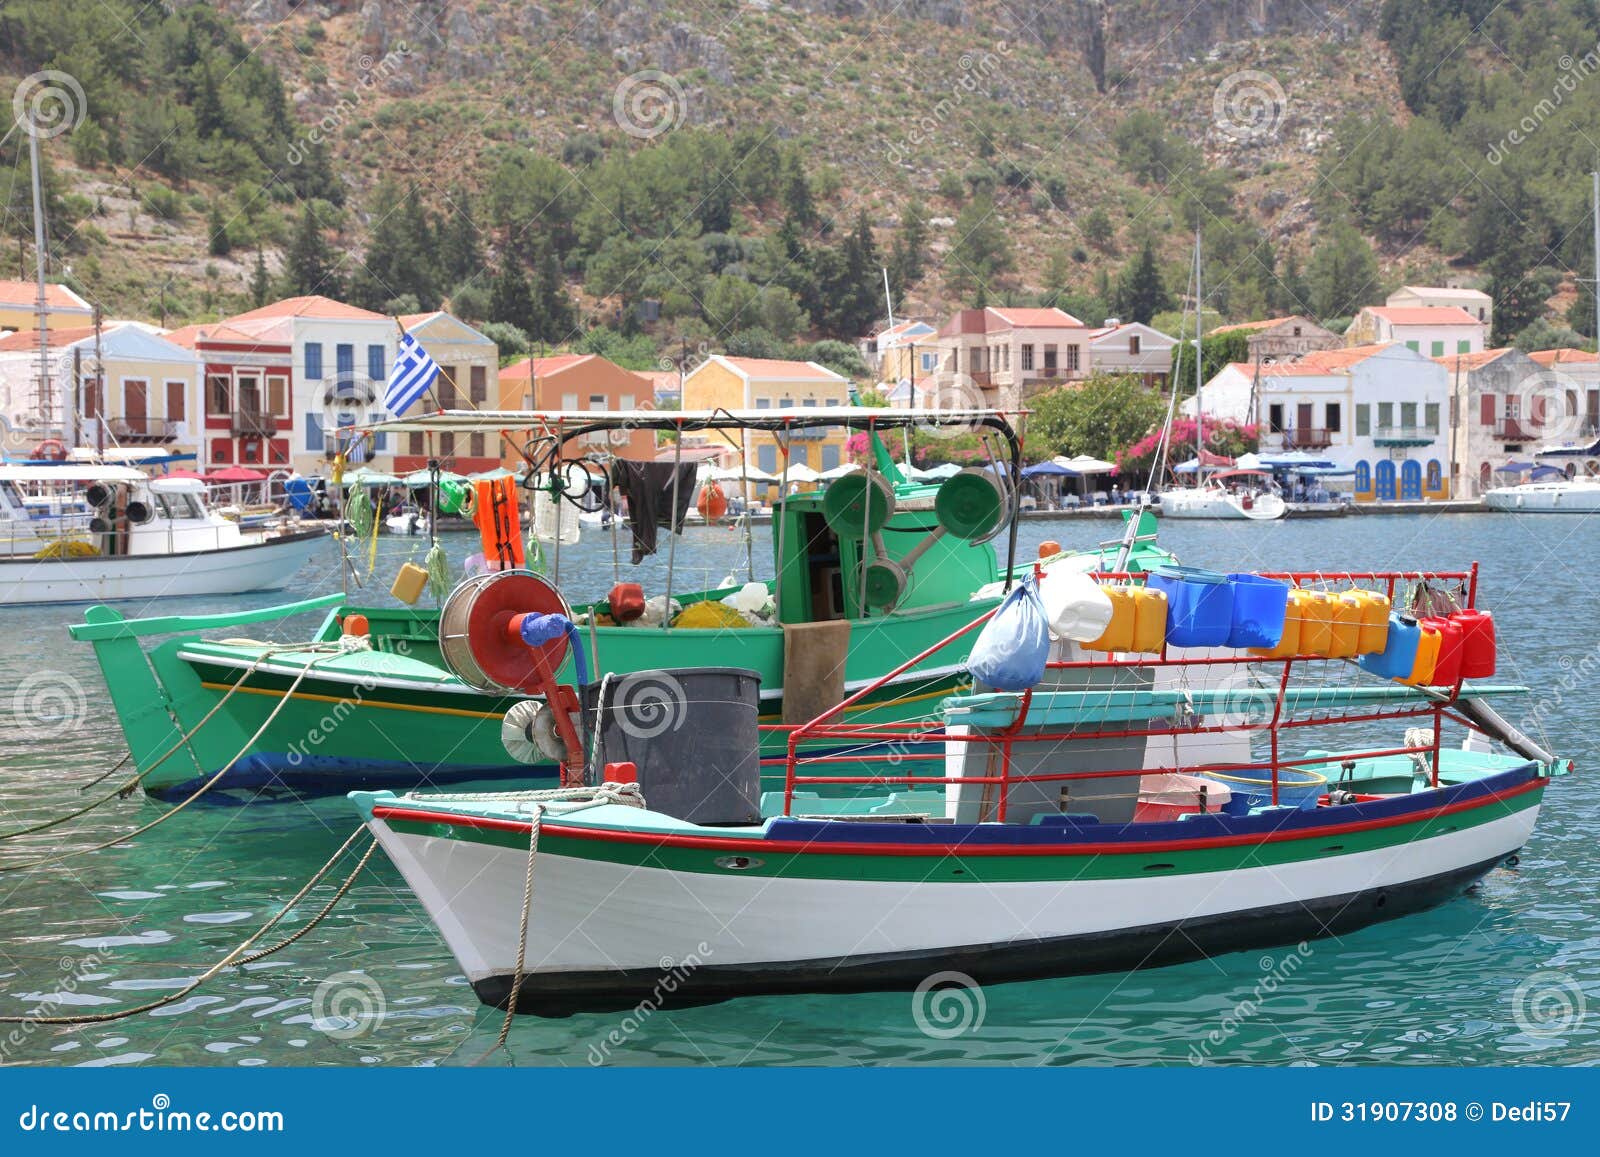 Fishing boats in the harbor of Megisti on the island of Kastelorizo 